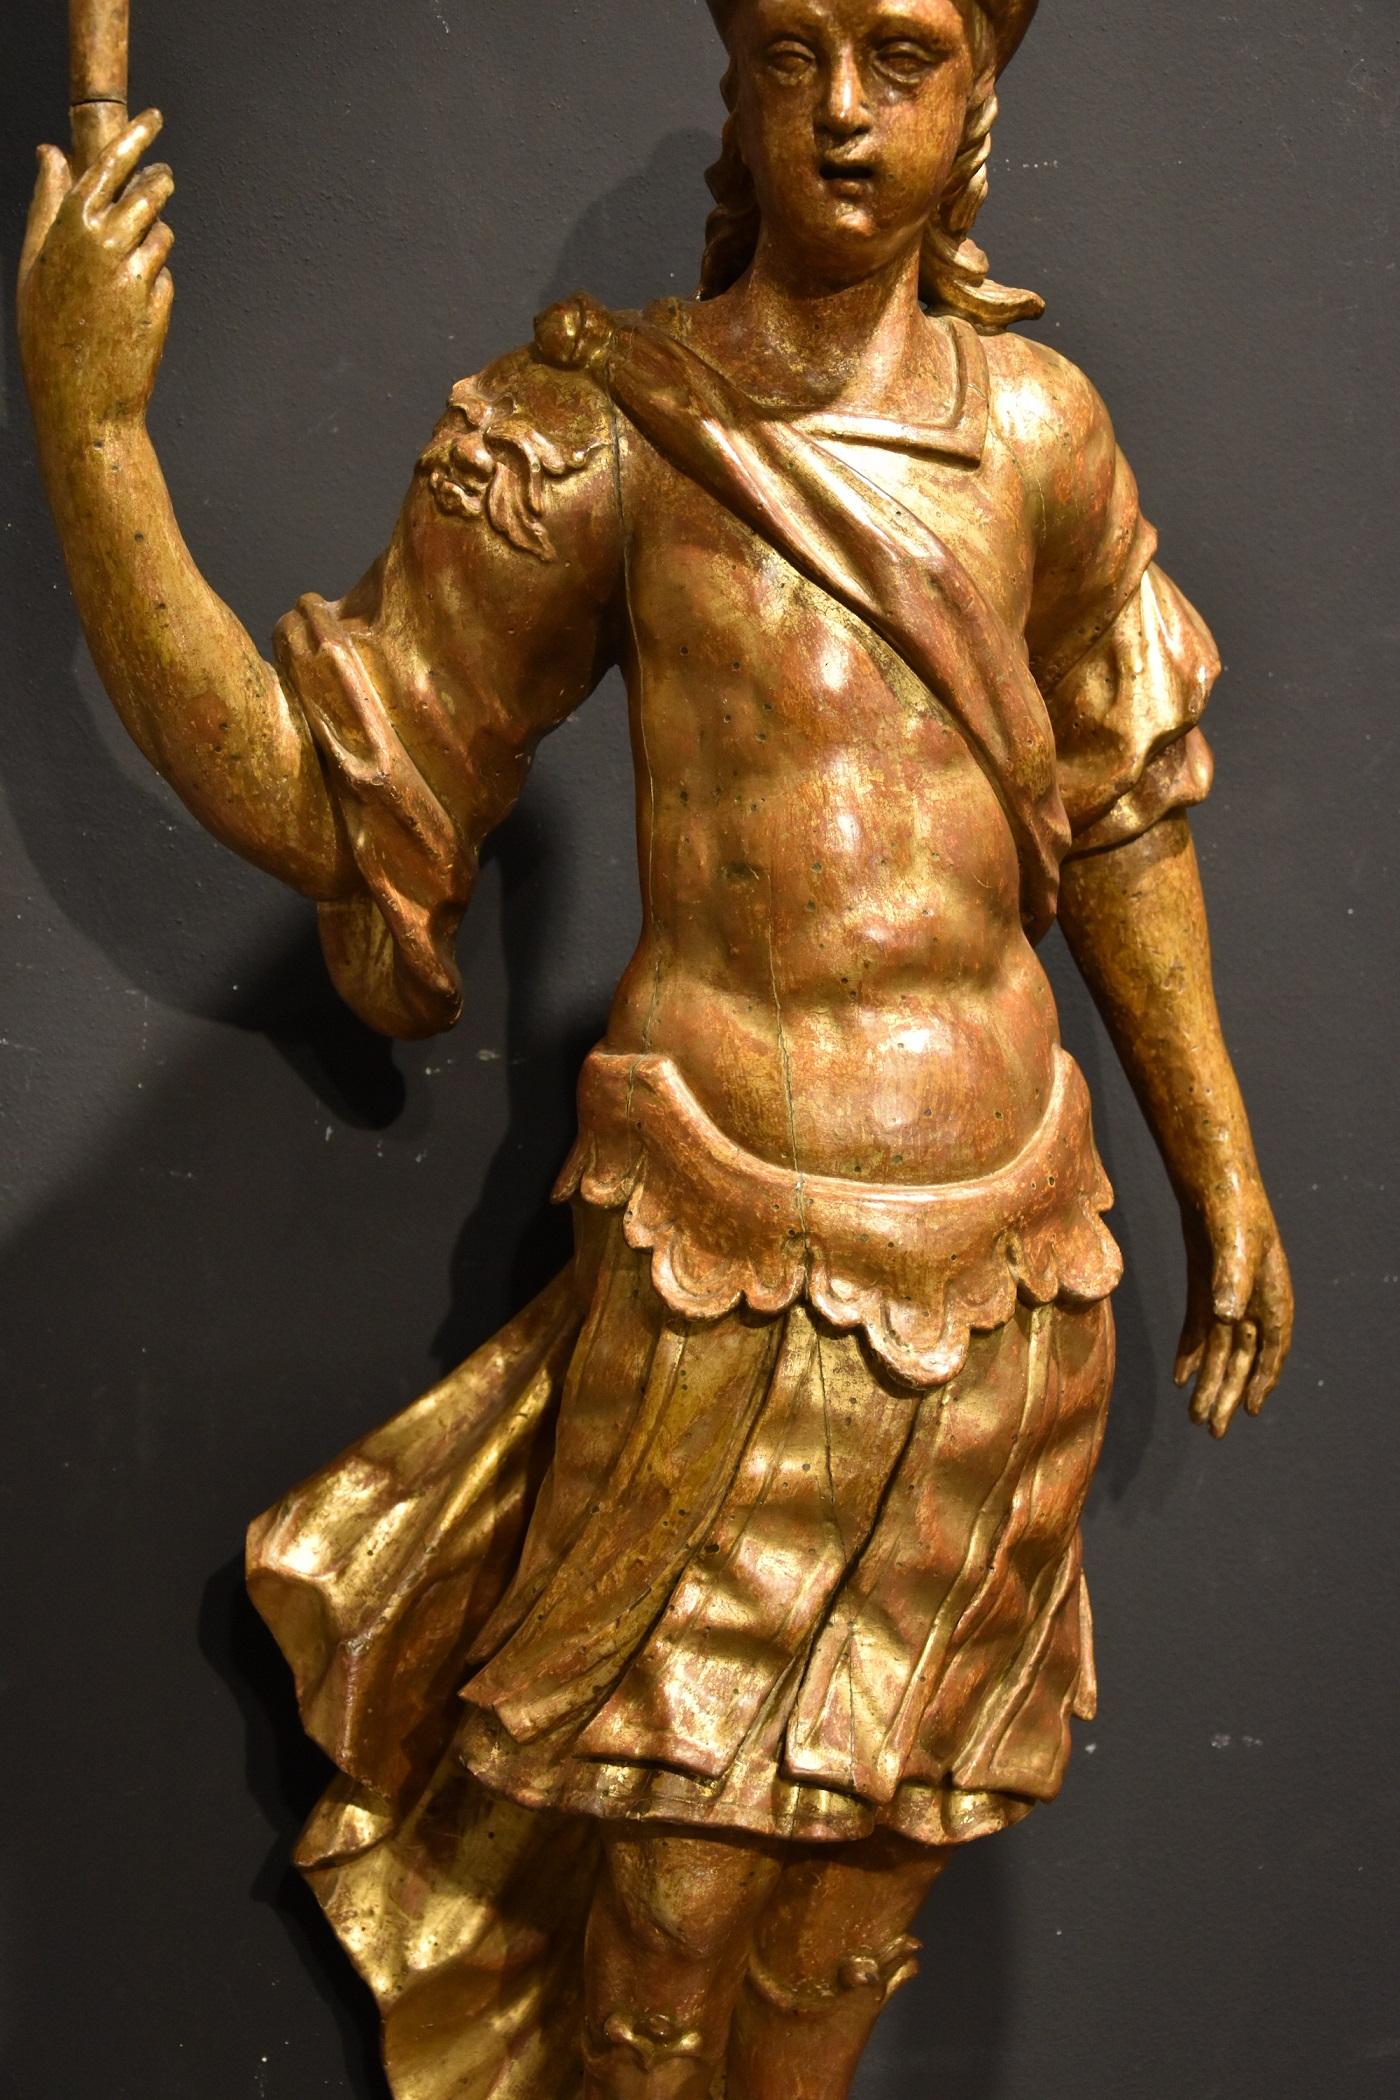 Venetian Sculpture 17th Century Wood Italian Old master Soldier Roma War Gold - Black Abstract Sculpture by Venetian Baroque sculptor of the 17th century